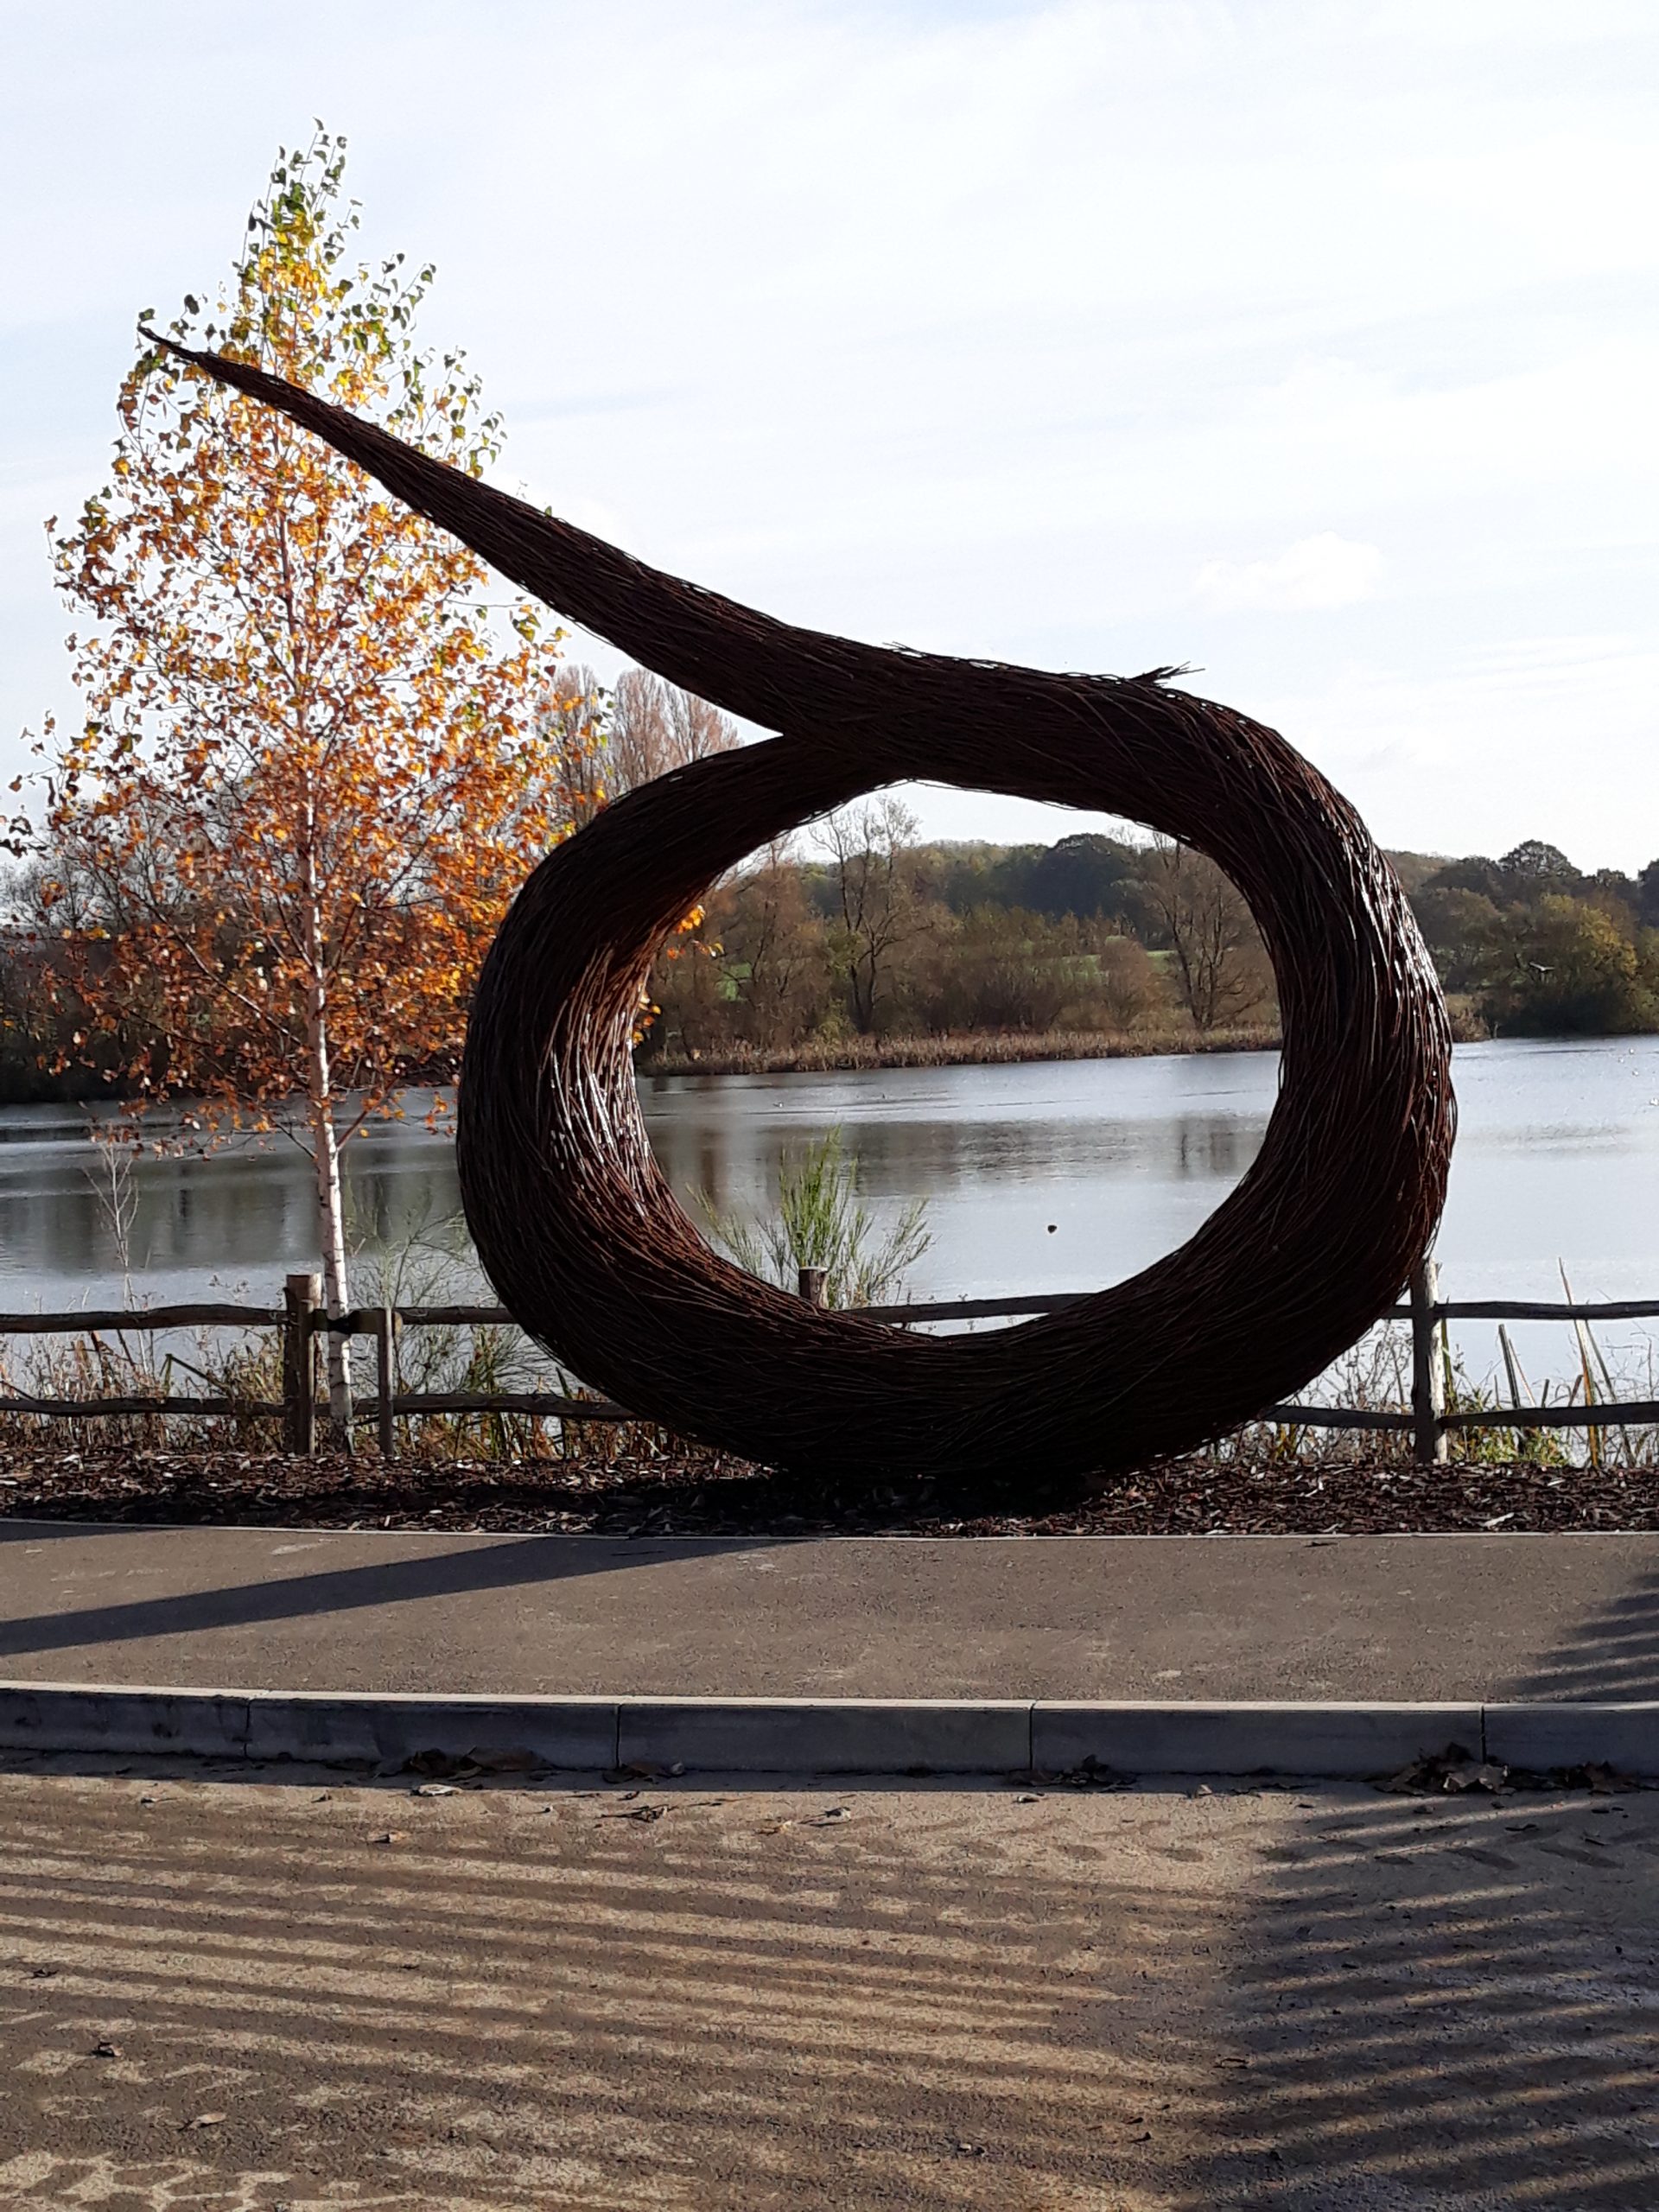 ‘The Loop’ public art installation